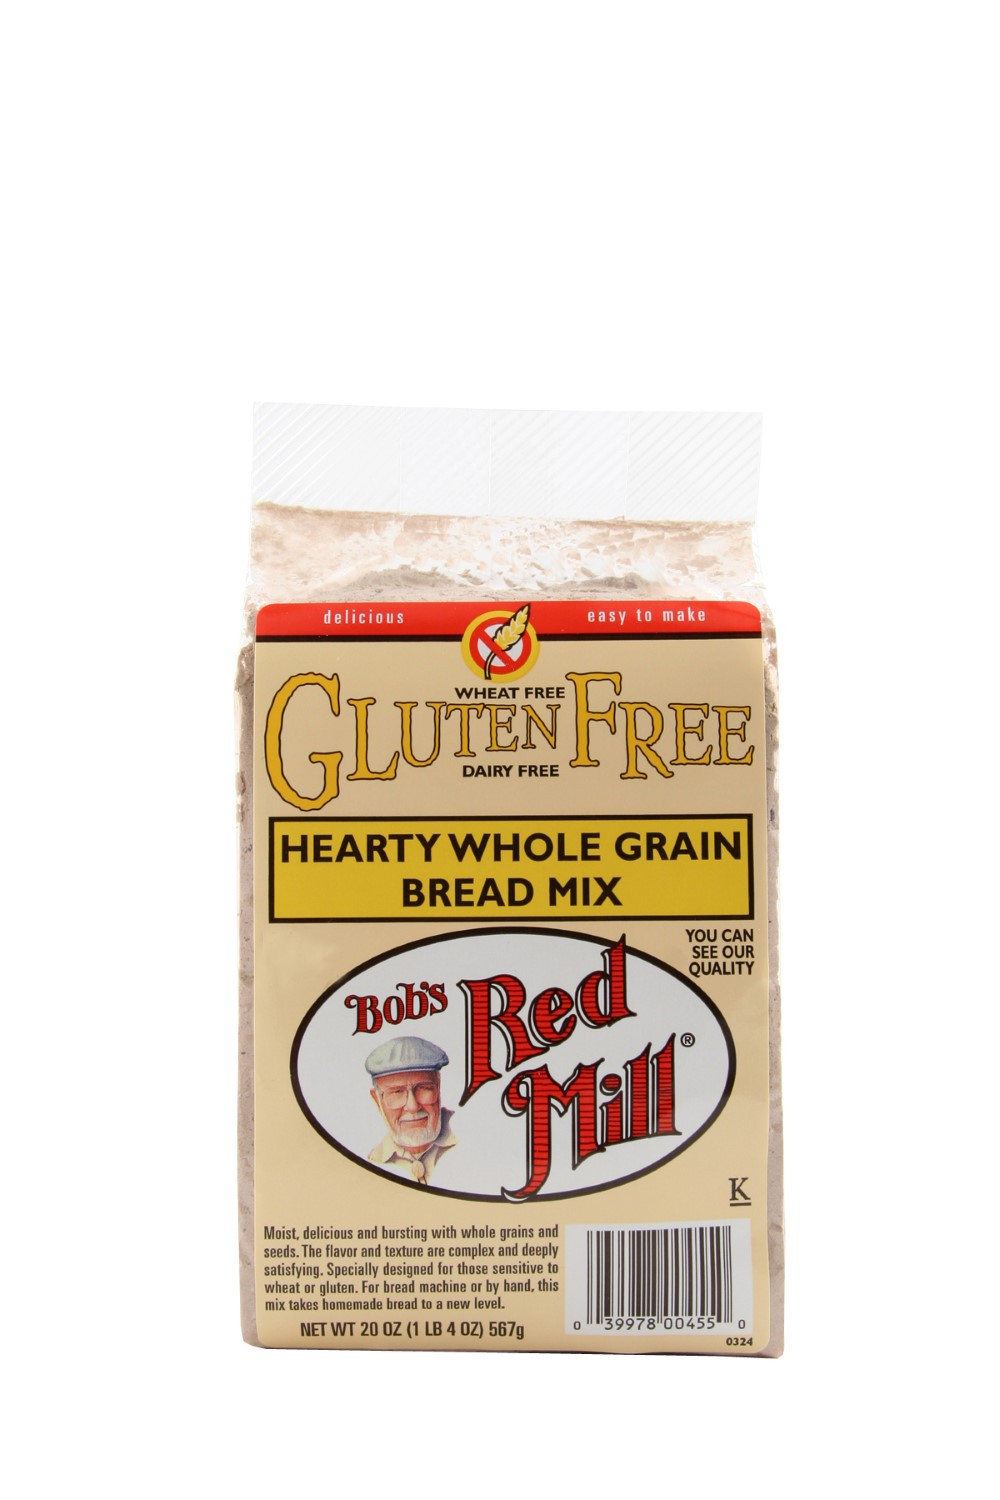 Bobs Red Mill Gluten Free Bread
 Bobs Red Mil Gluten Free Hearty Whole Grain Bread 20 Oz